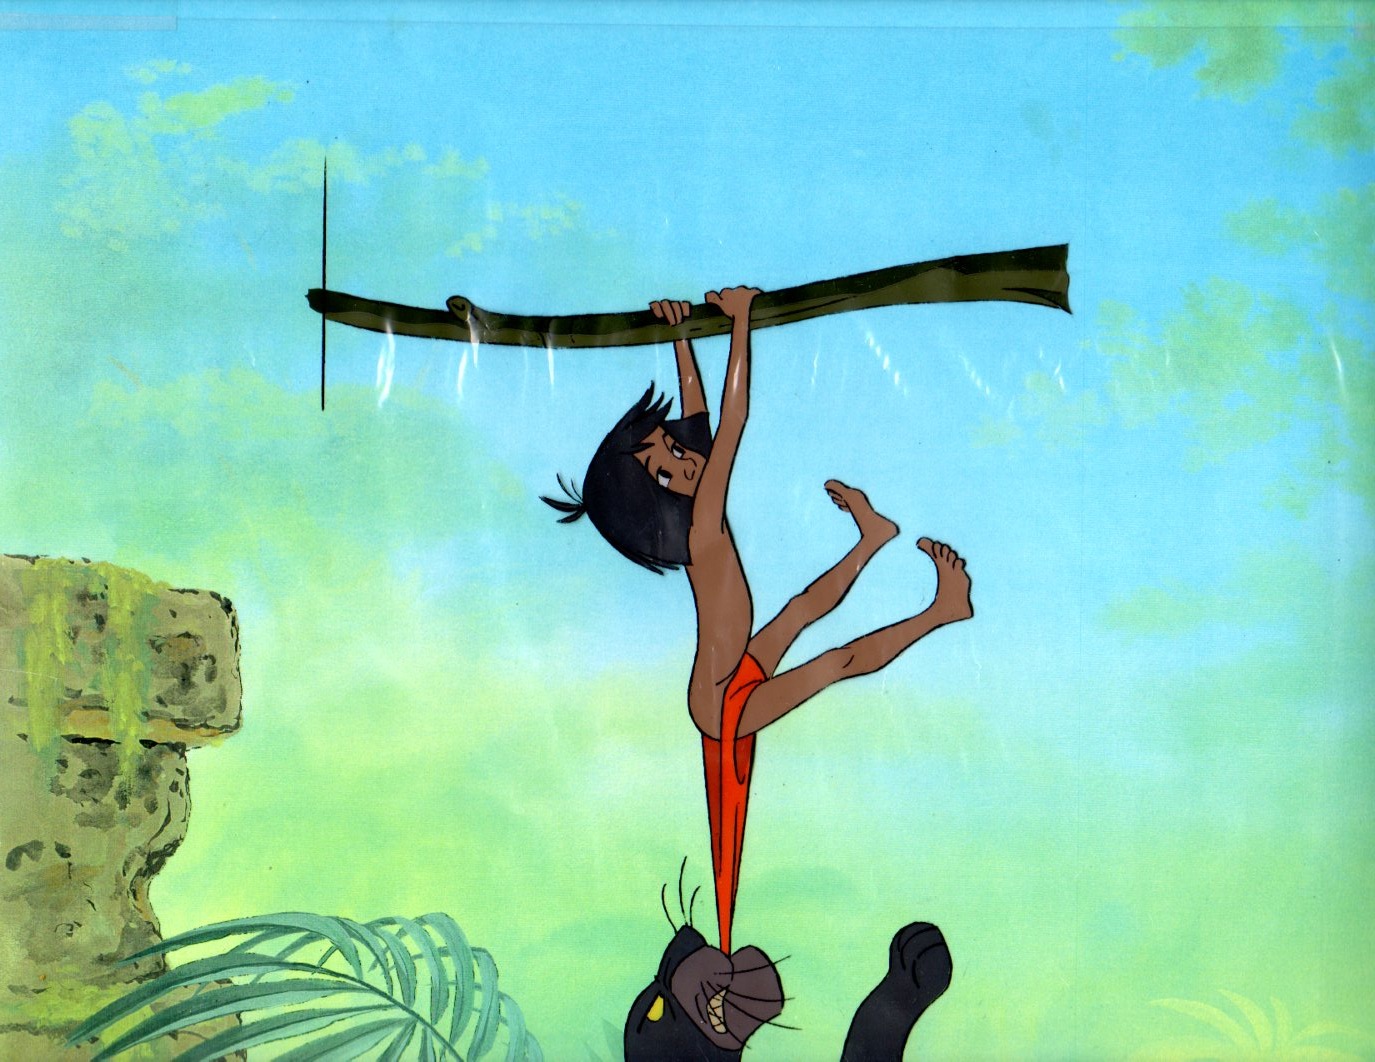 REMEMBER THE SAIYANS - Disney's The Jungle Book.